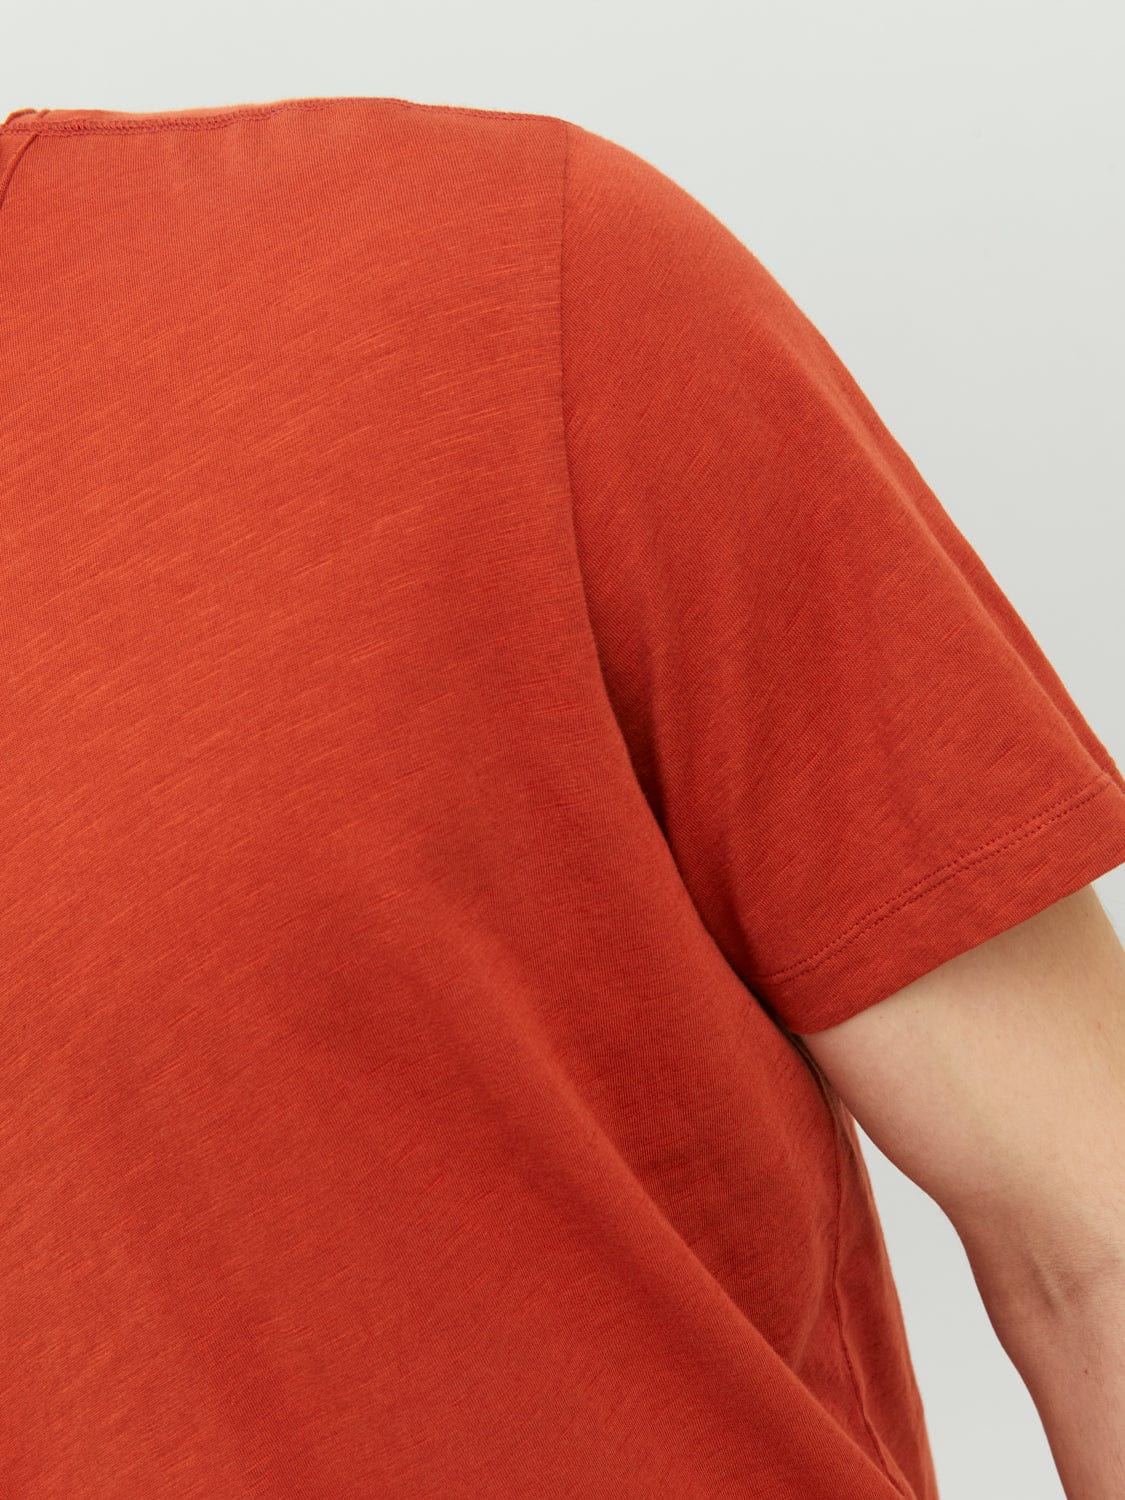 Camiseta básica de manga corta naranja - JJEBASHER